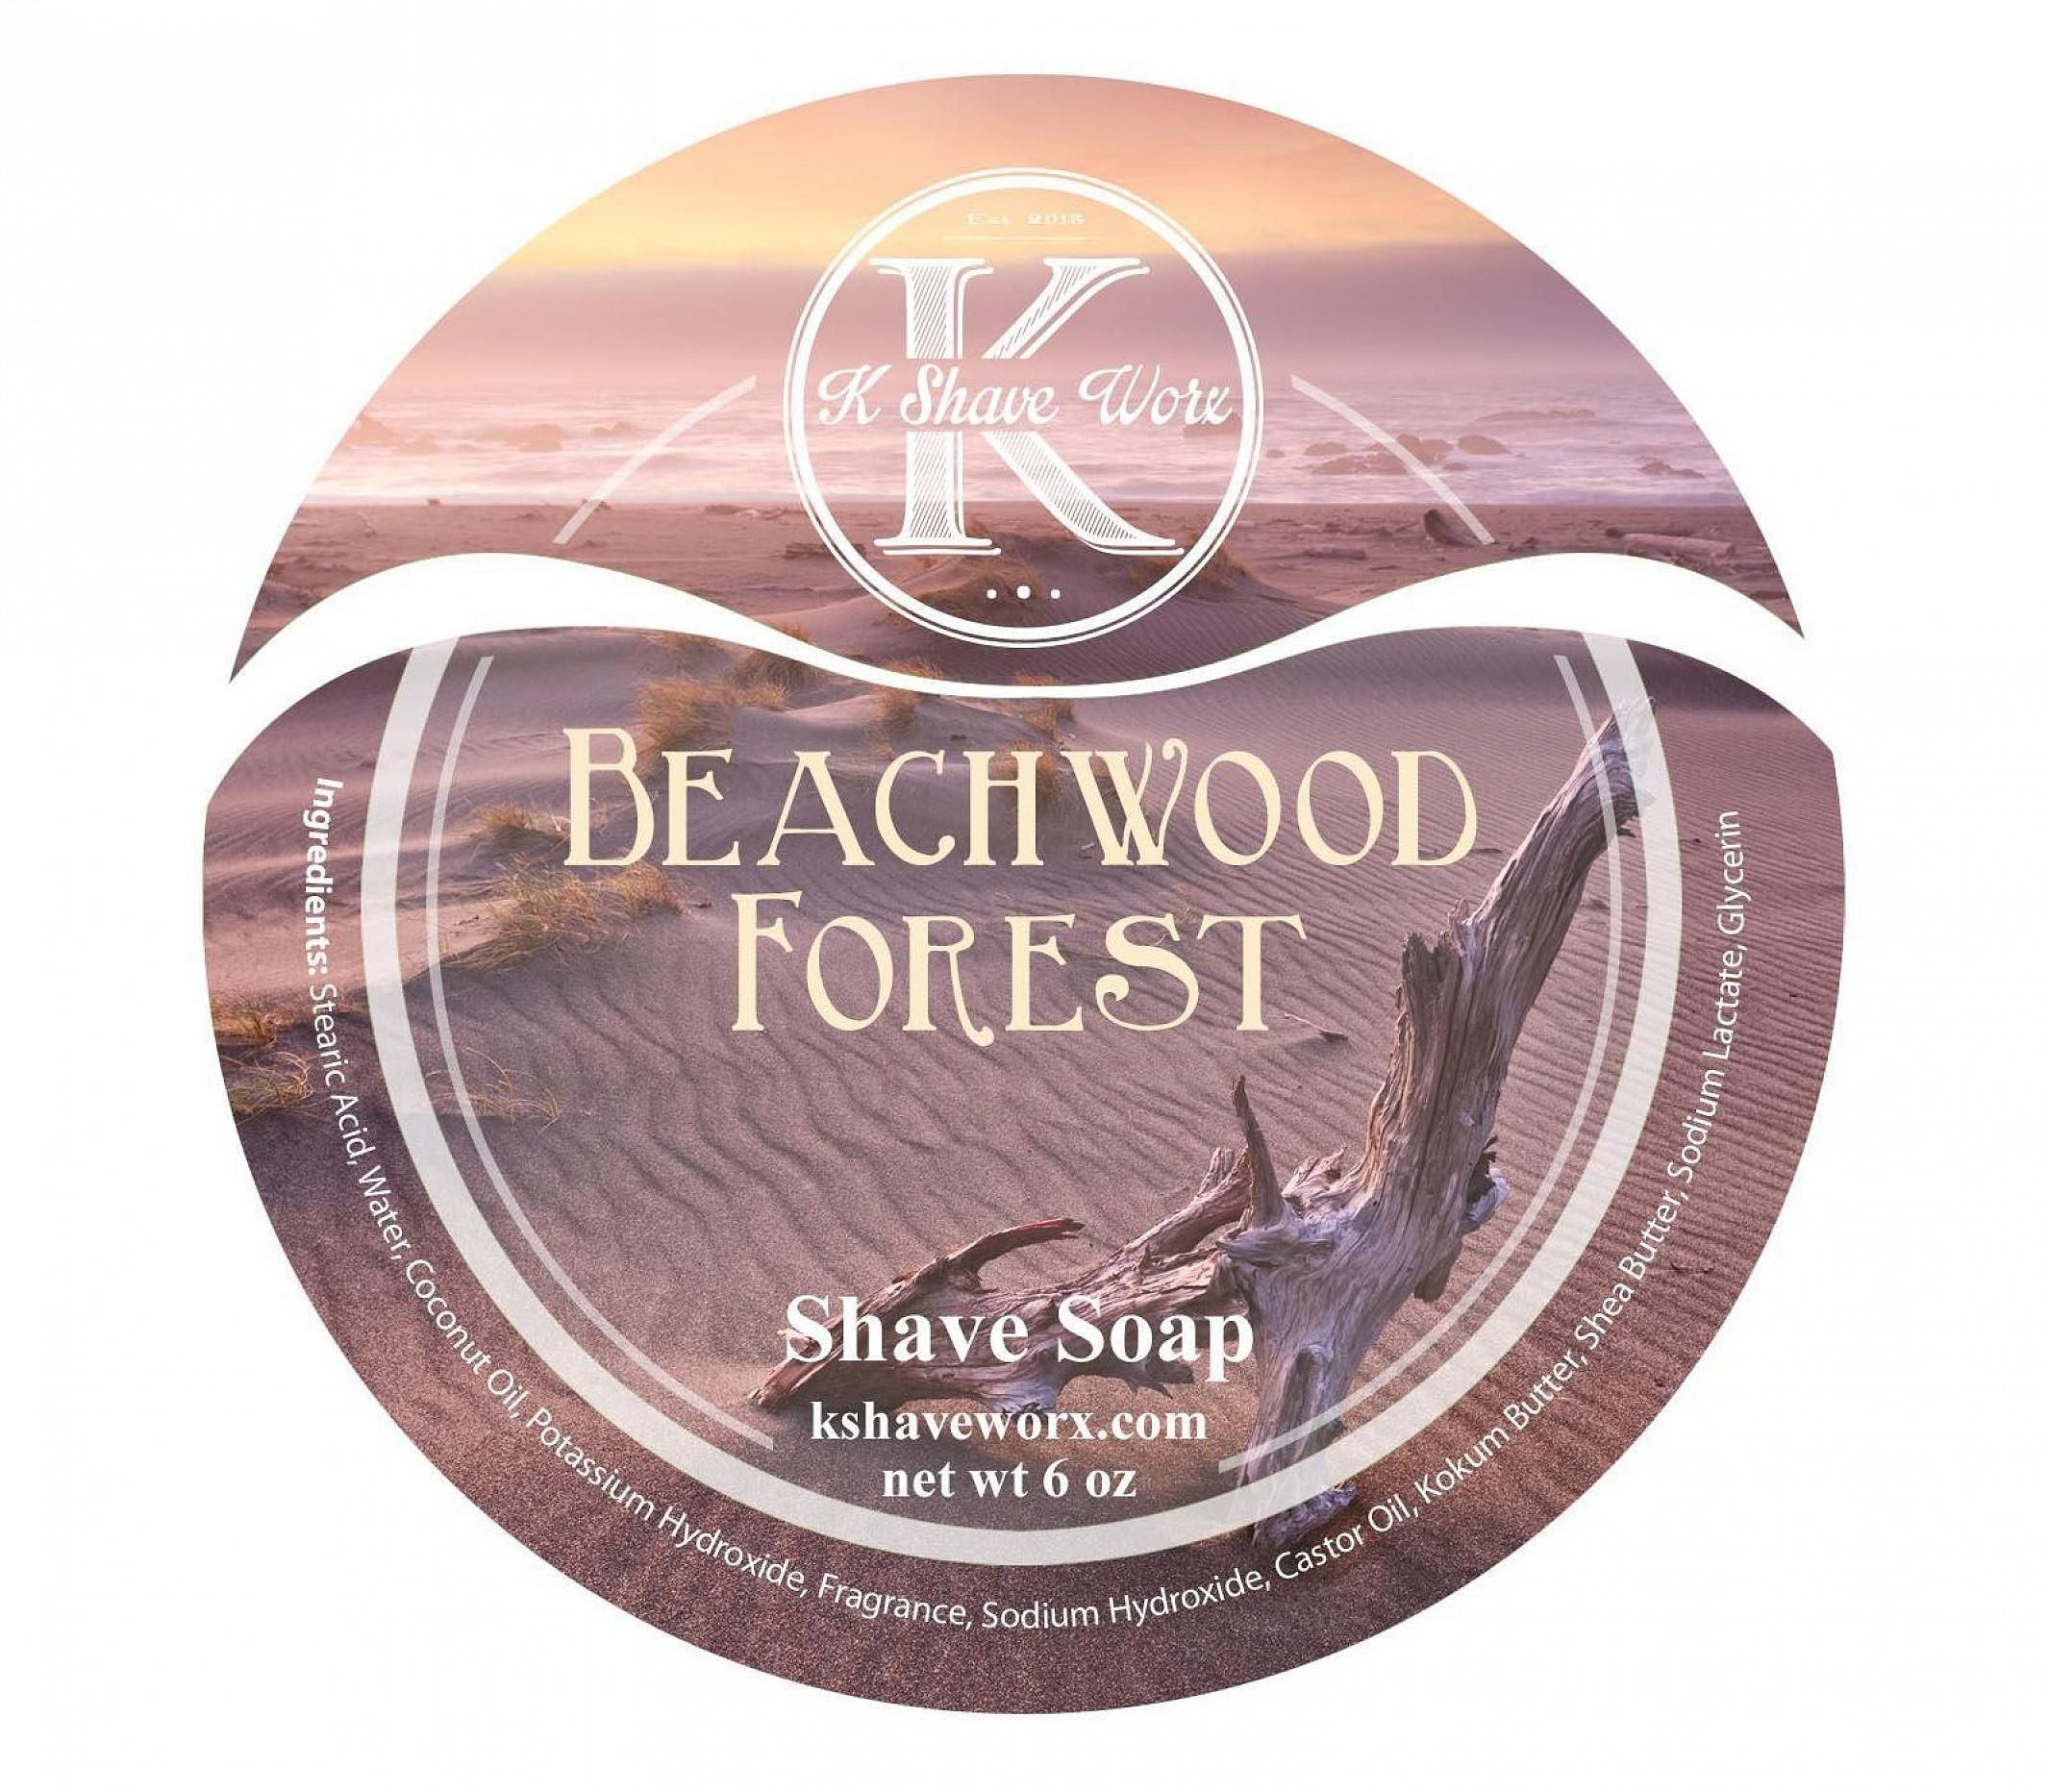 K Shave Worx "Beachwood Forest"